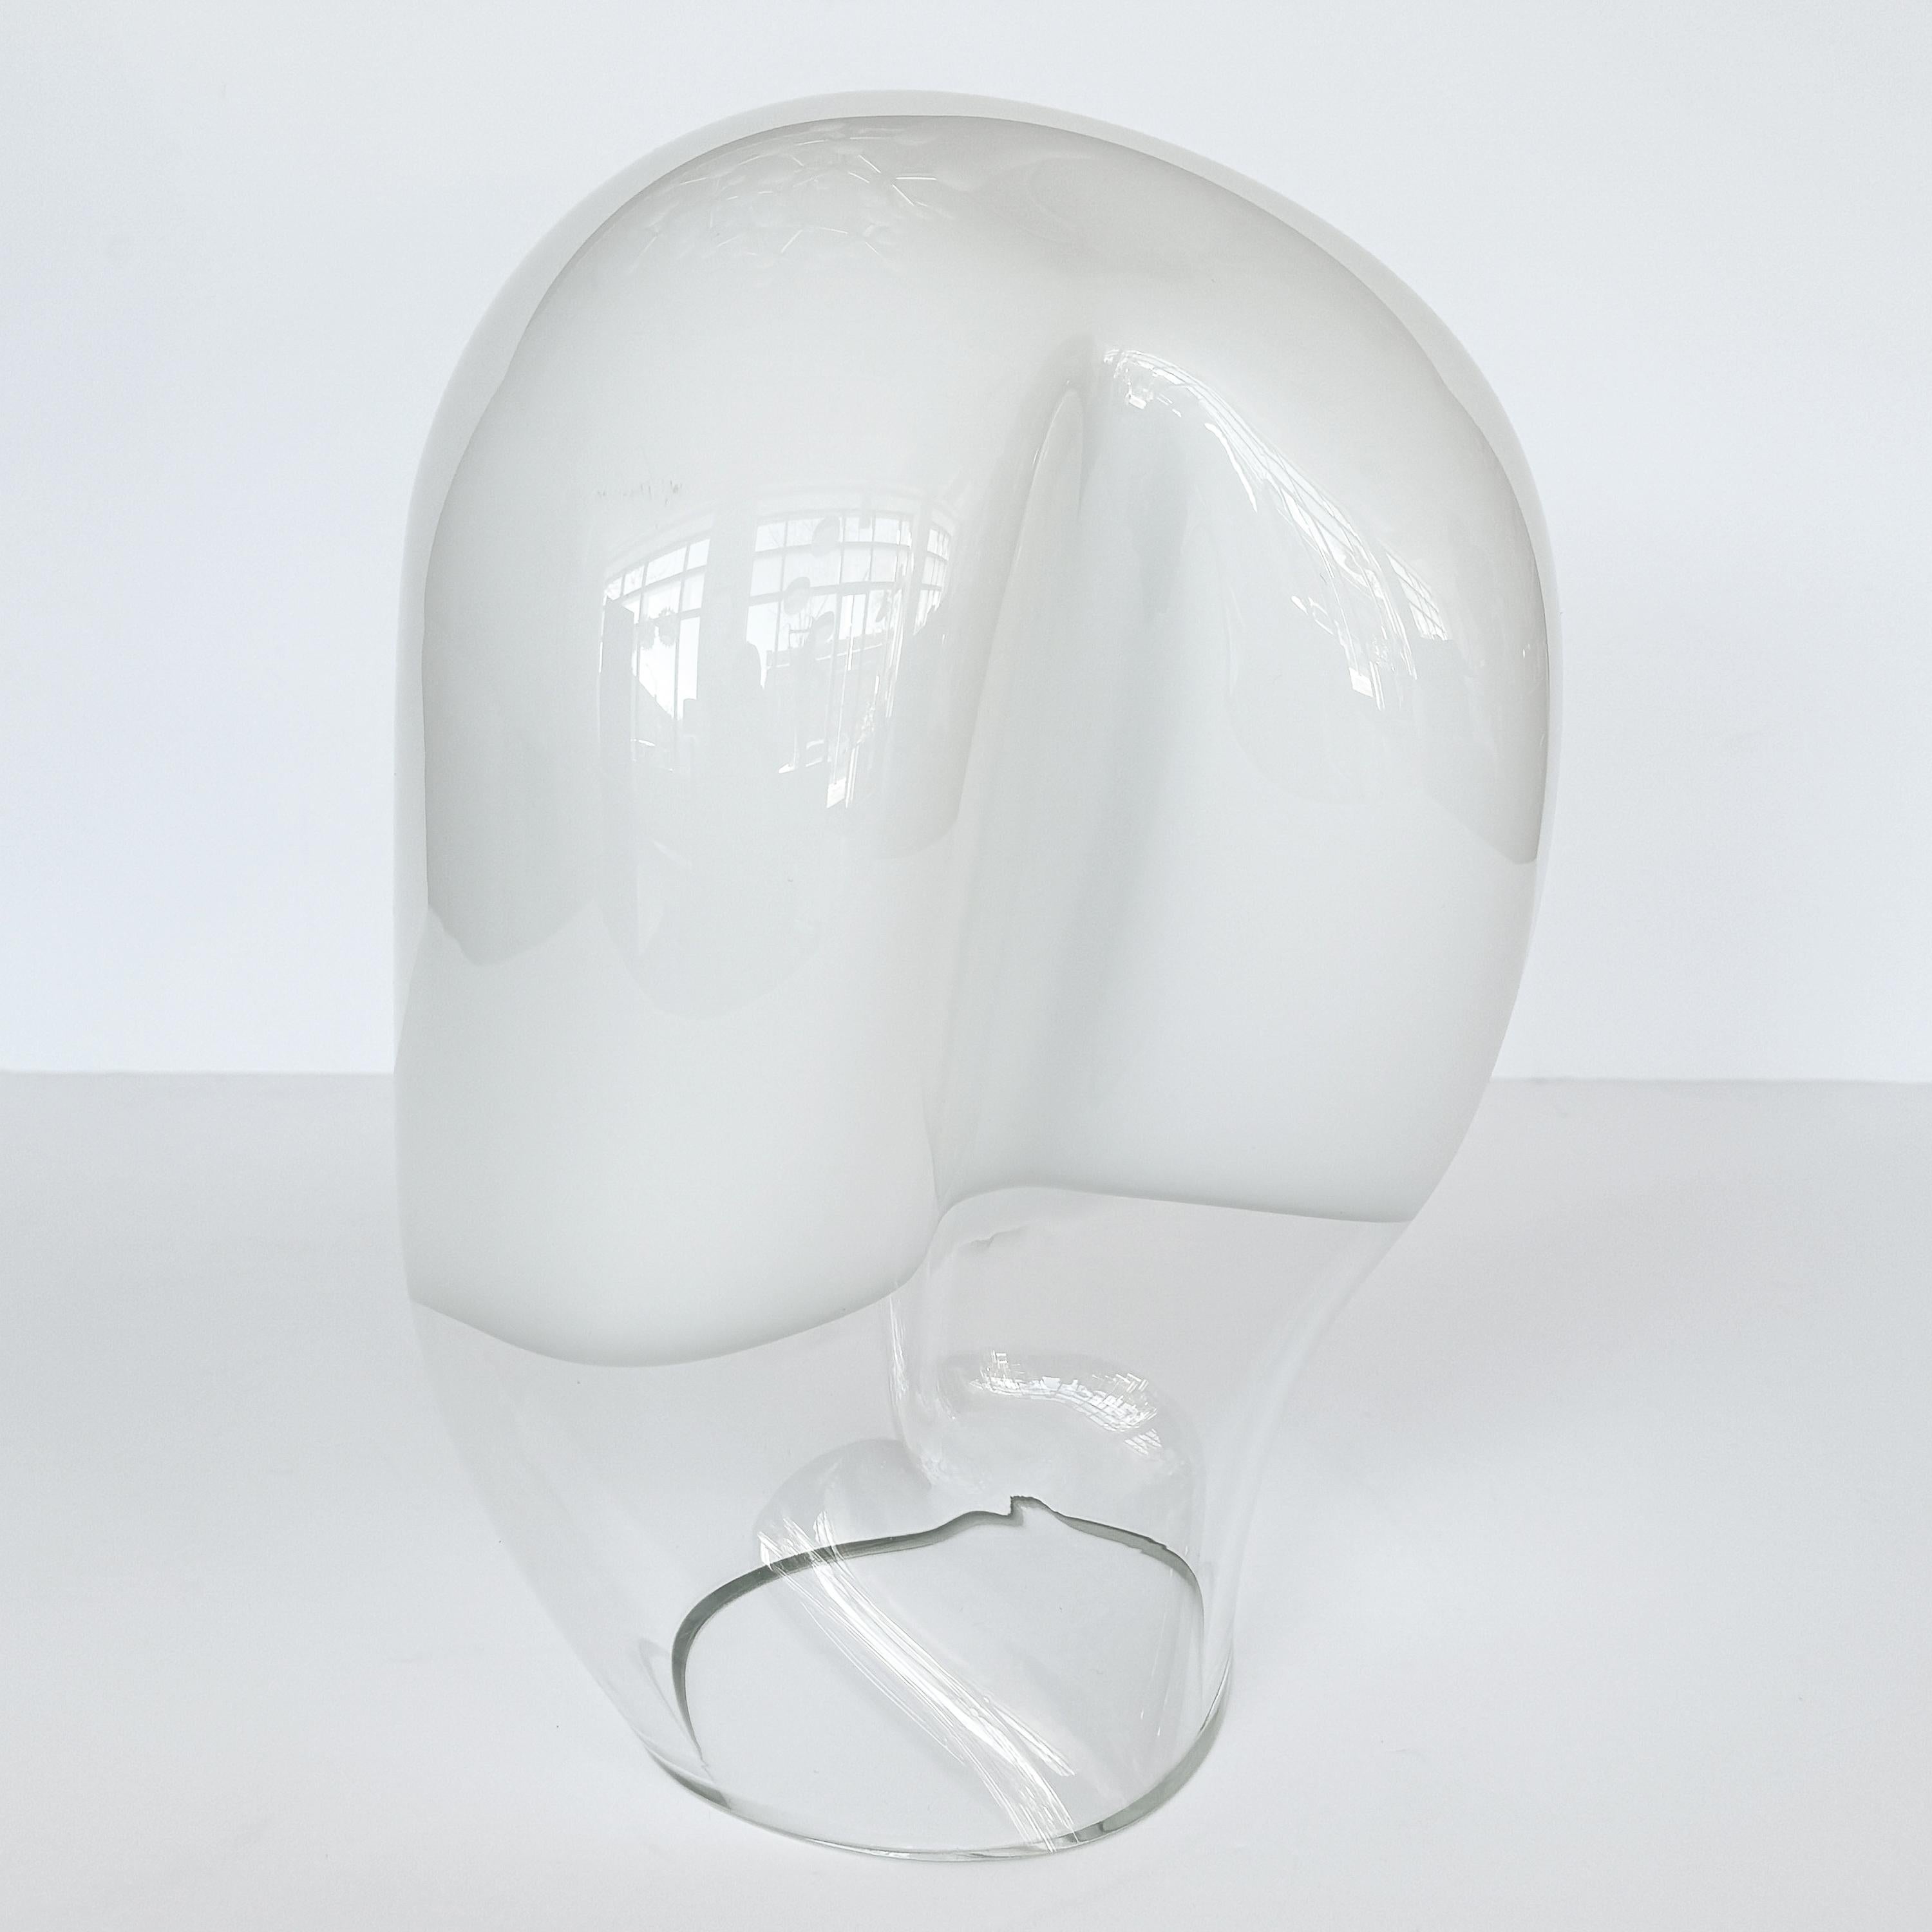 Vistosi Lampe à poser Zaghetto Modèle L282 par Gino Vistosi Bon état - En vente à Chicago, IL